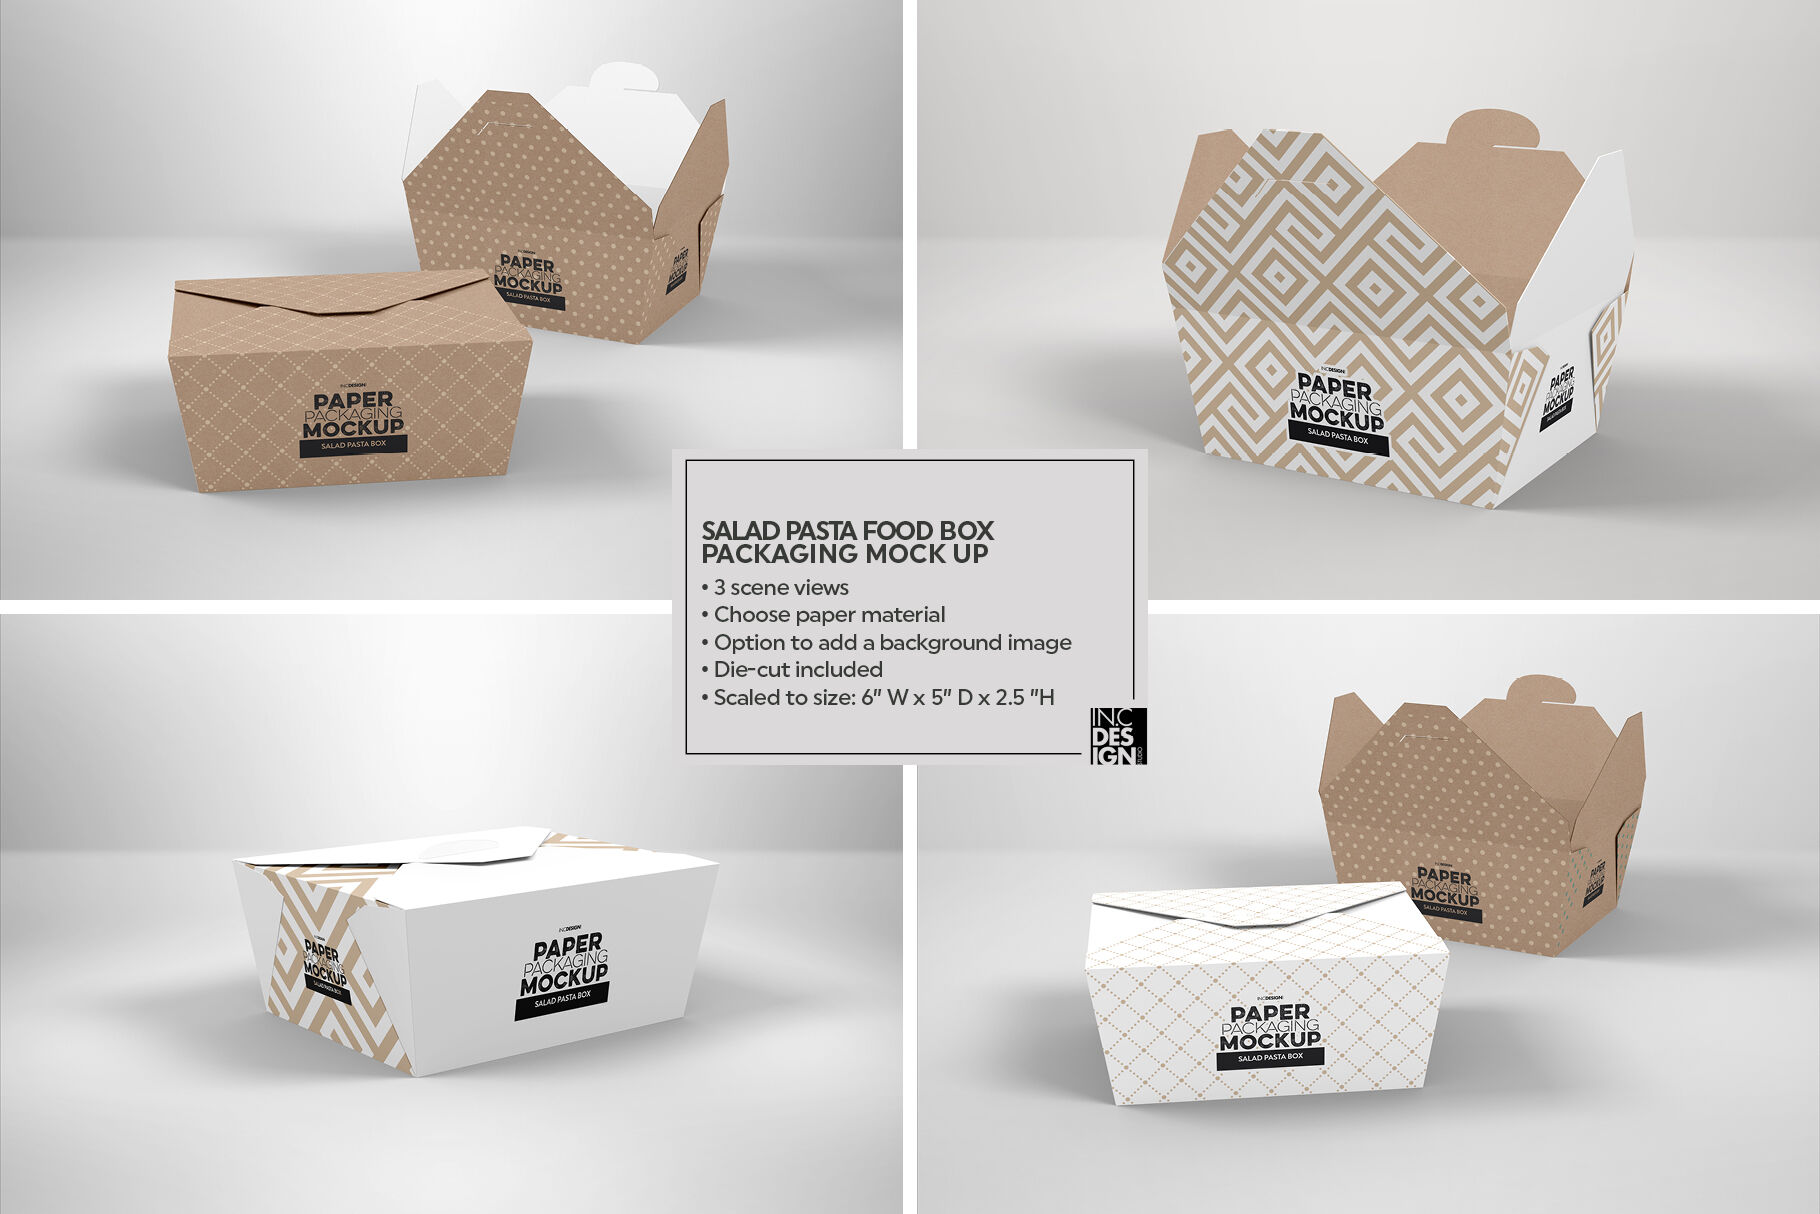 Salad Pasta Box Packaging Mock Up By Inc Design Studio Thehungryjpeg Com